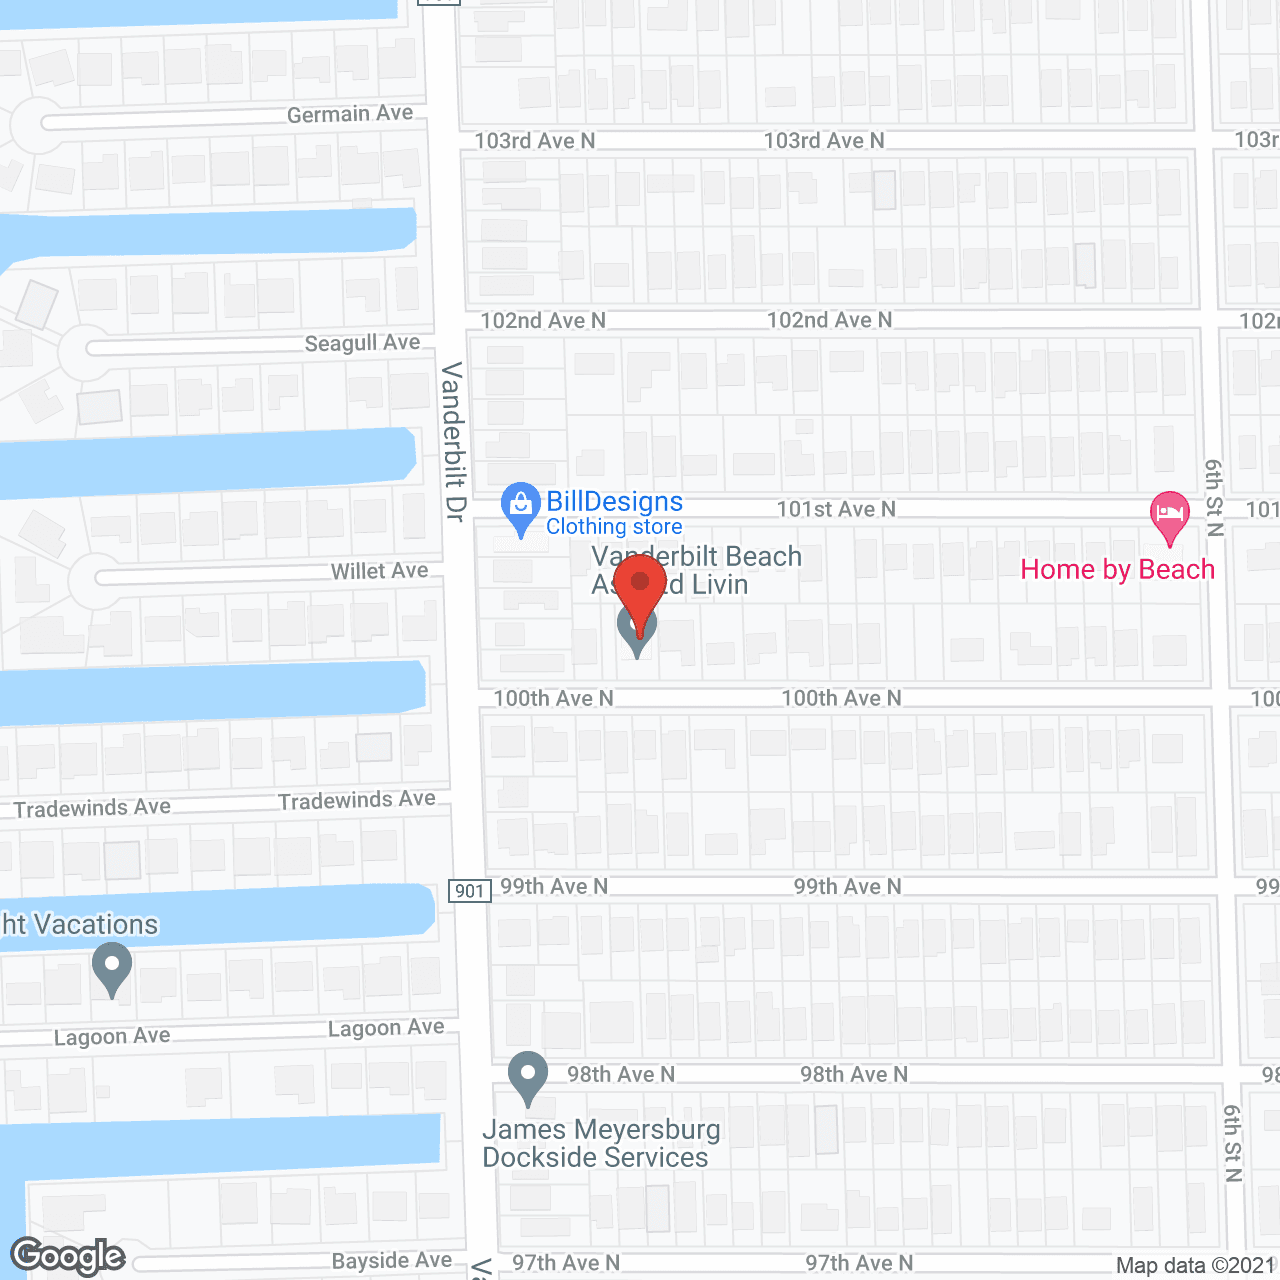 Vanderbilt Beach Assisted Living Home in google map